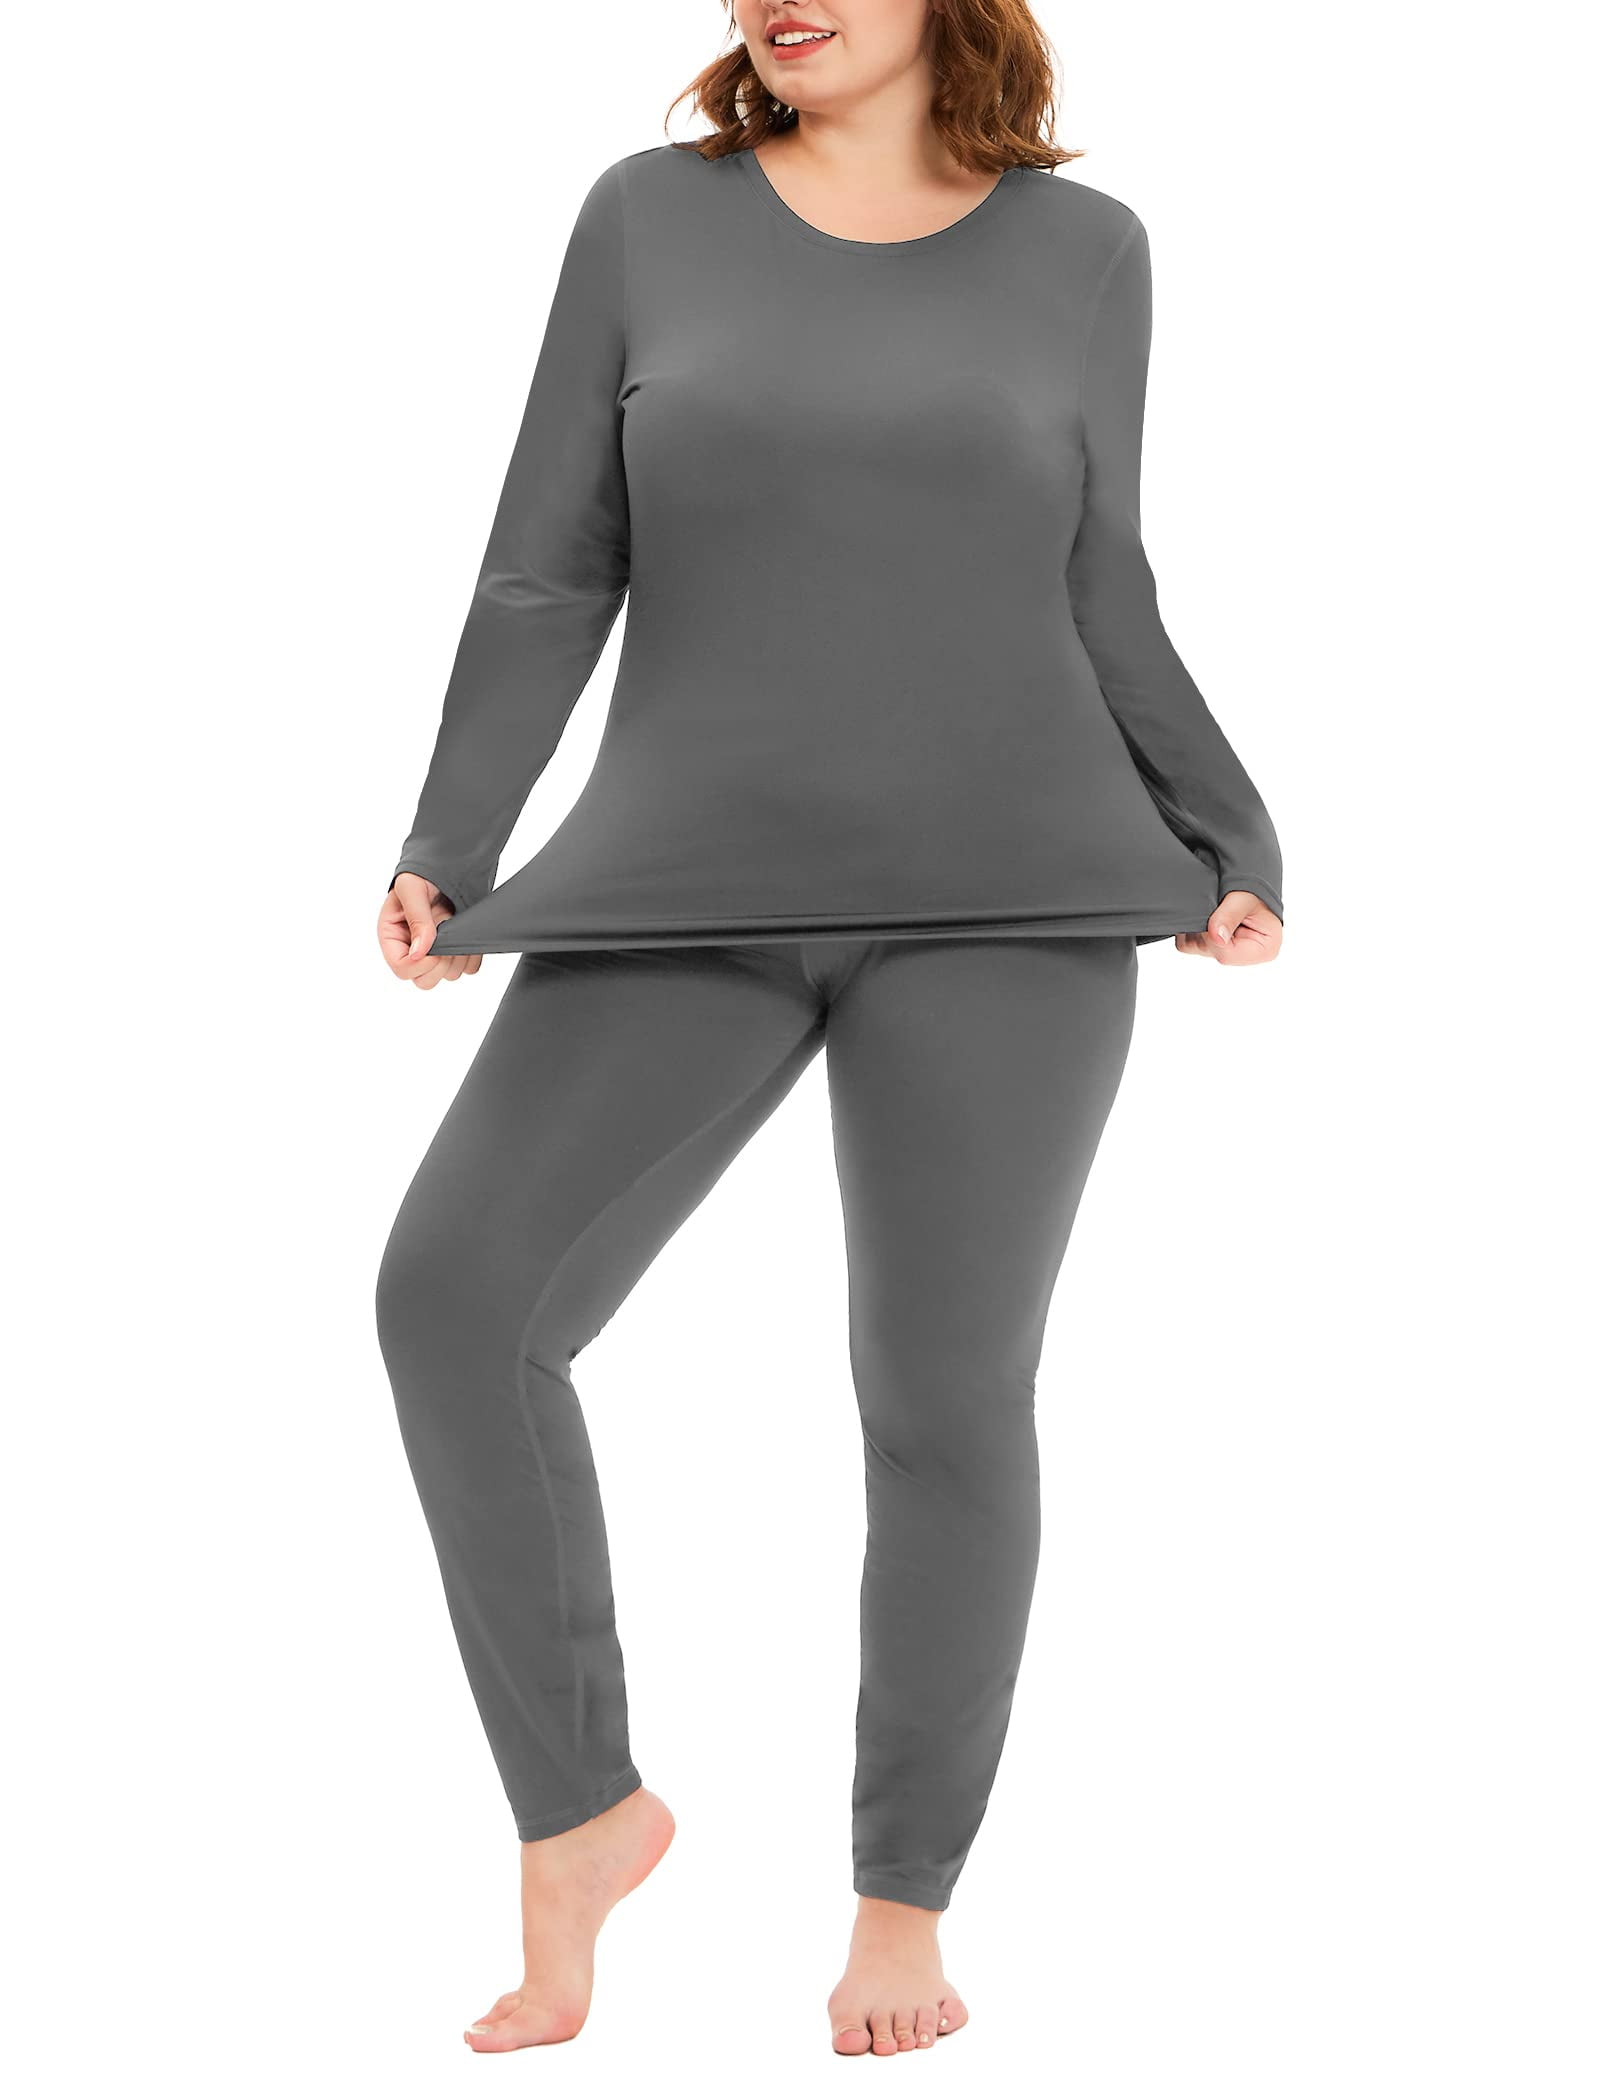 TIYOMI Plus Size 5X Dark Grey Thermal Underwear Suits For Women